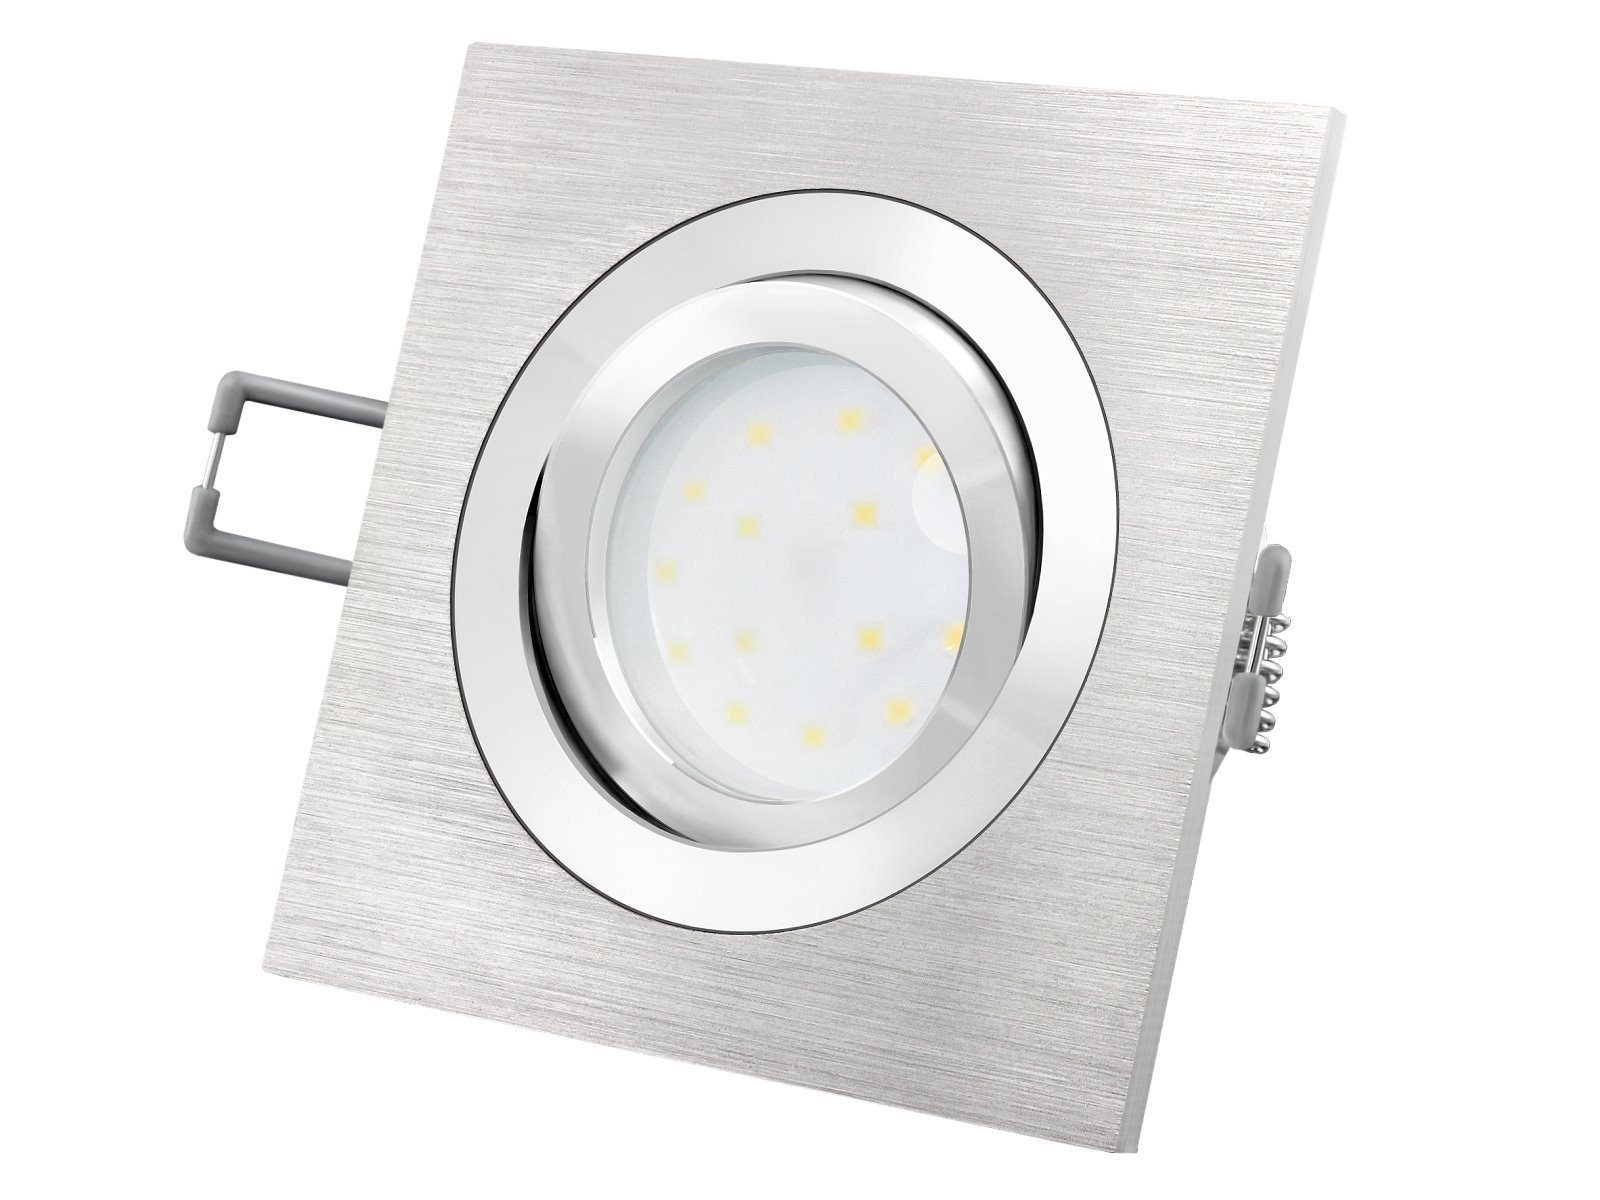 Top-Produkt SSC-LUXon LED Einbaustrahler QF-2 Alu mit 5W flach Warmweiß LED-Modul 230V, schwenkbar LED-Einbauspot SMD